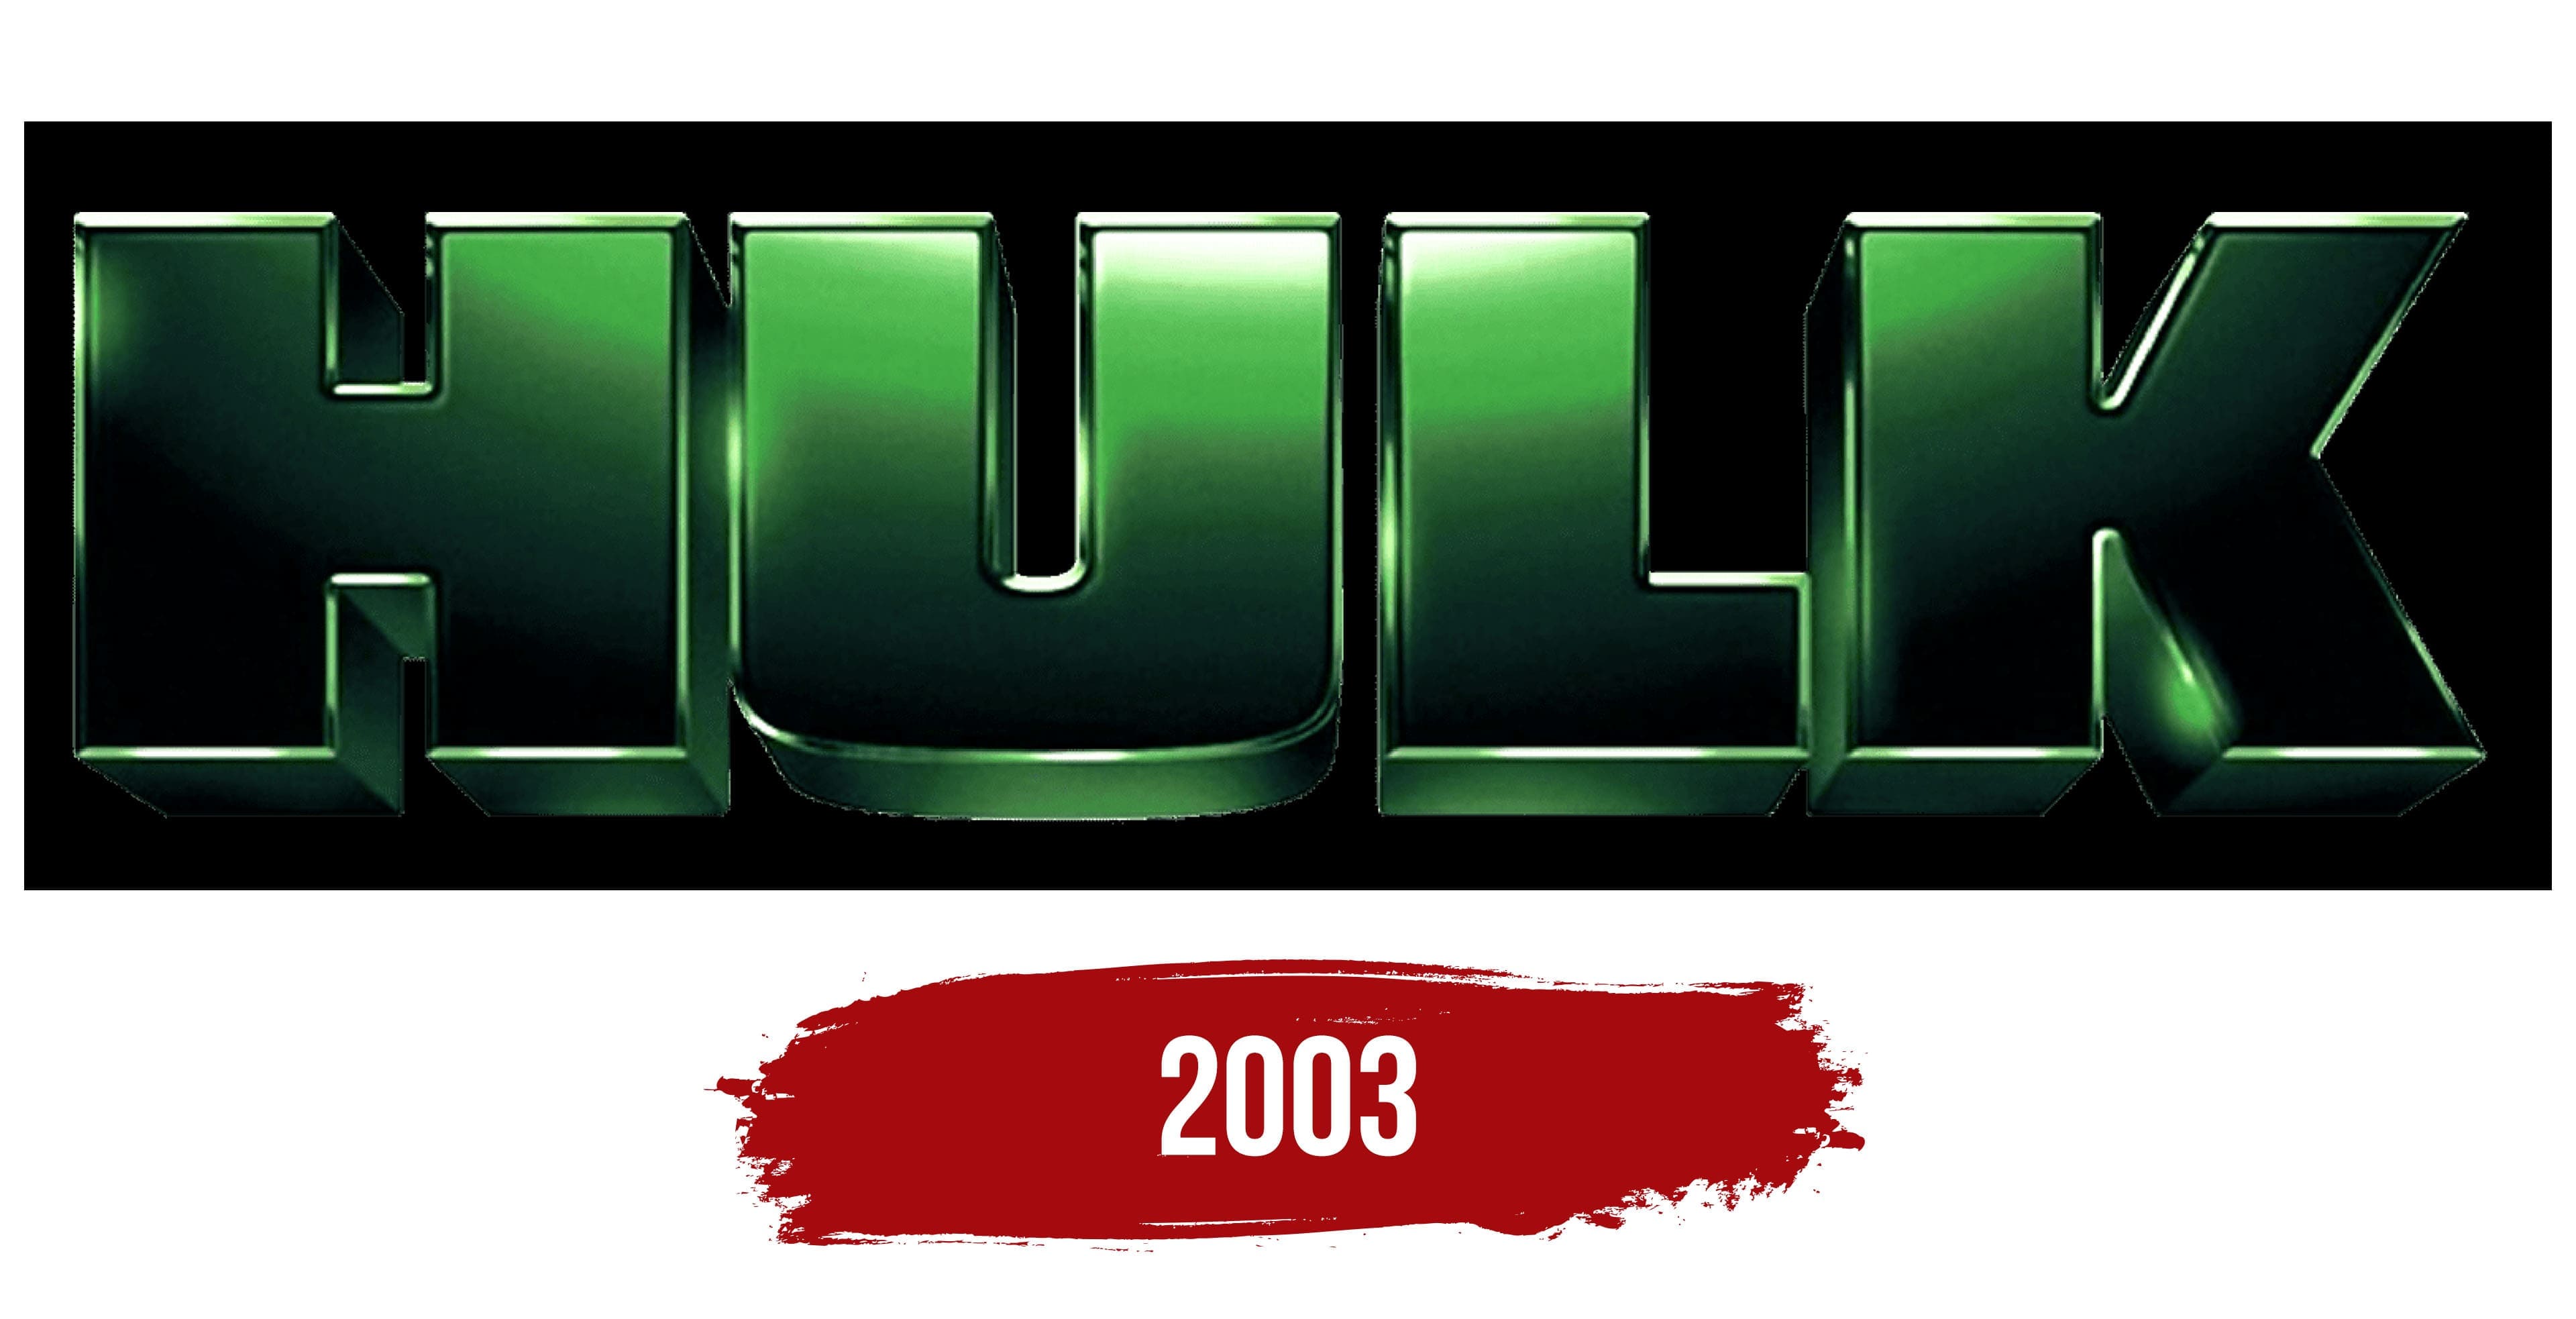 the incredible hulk logo